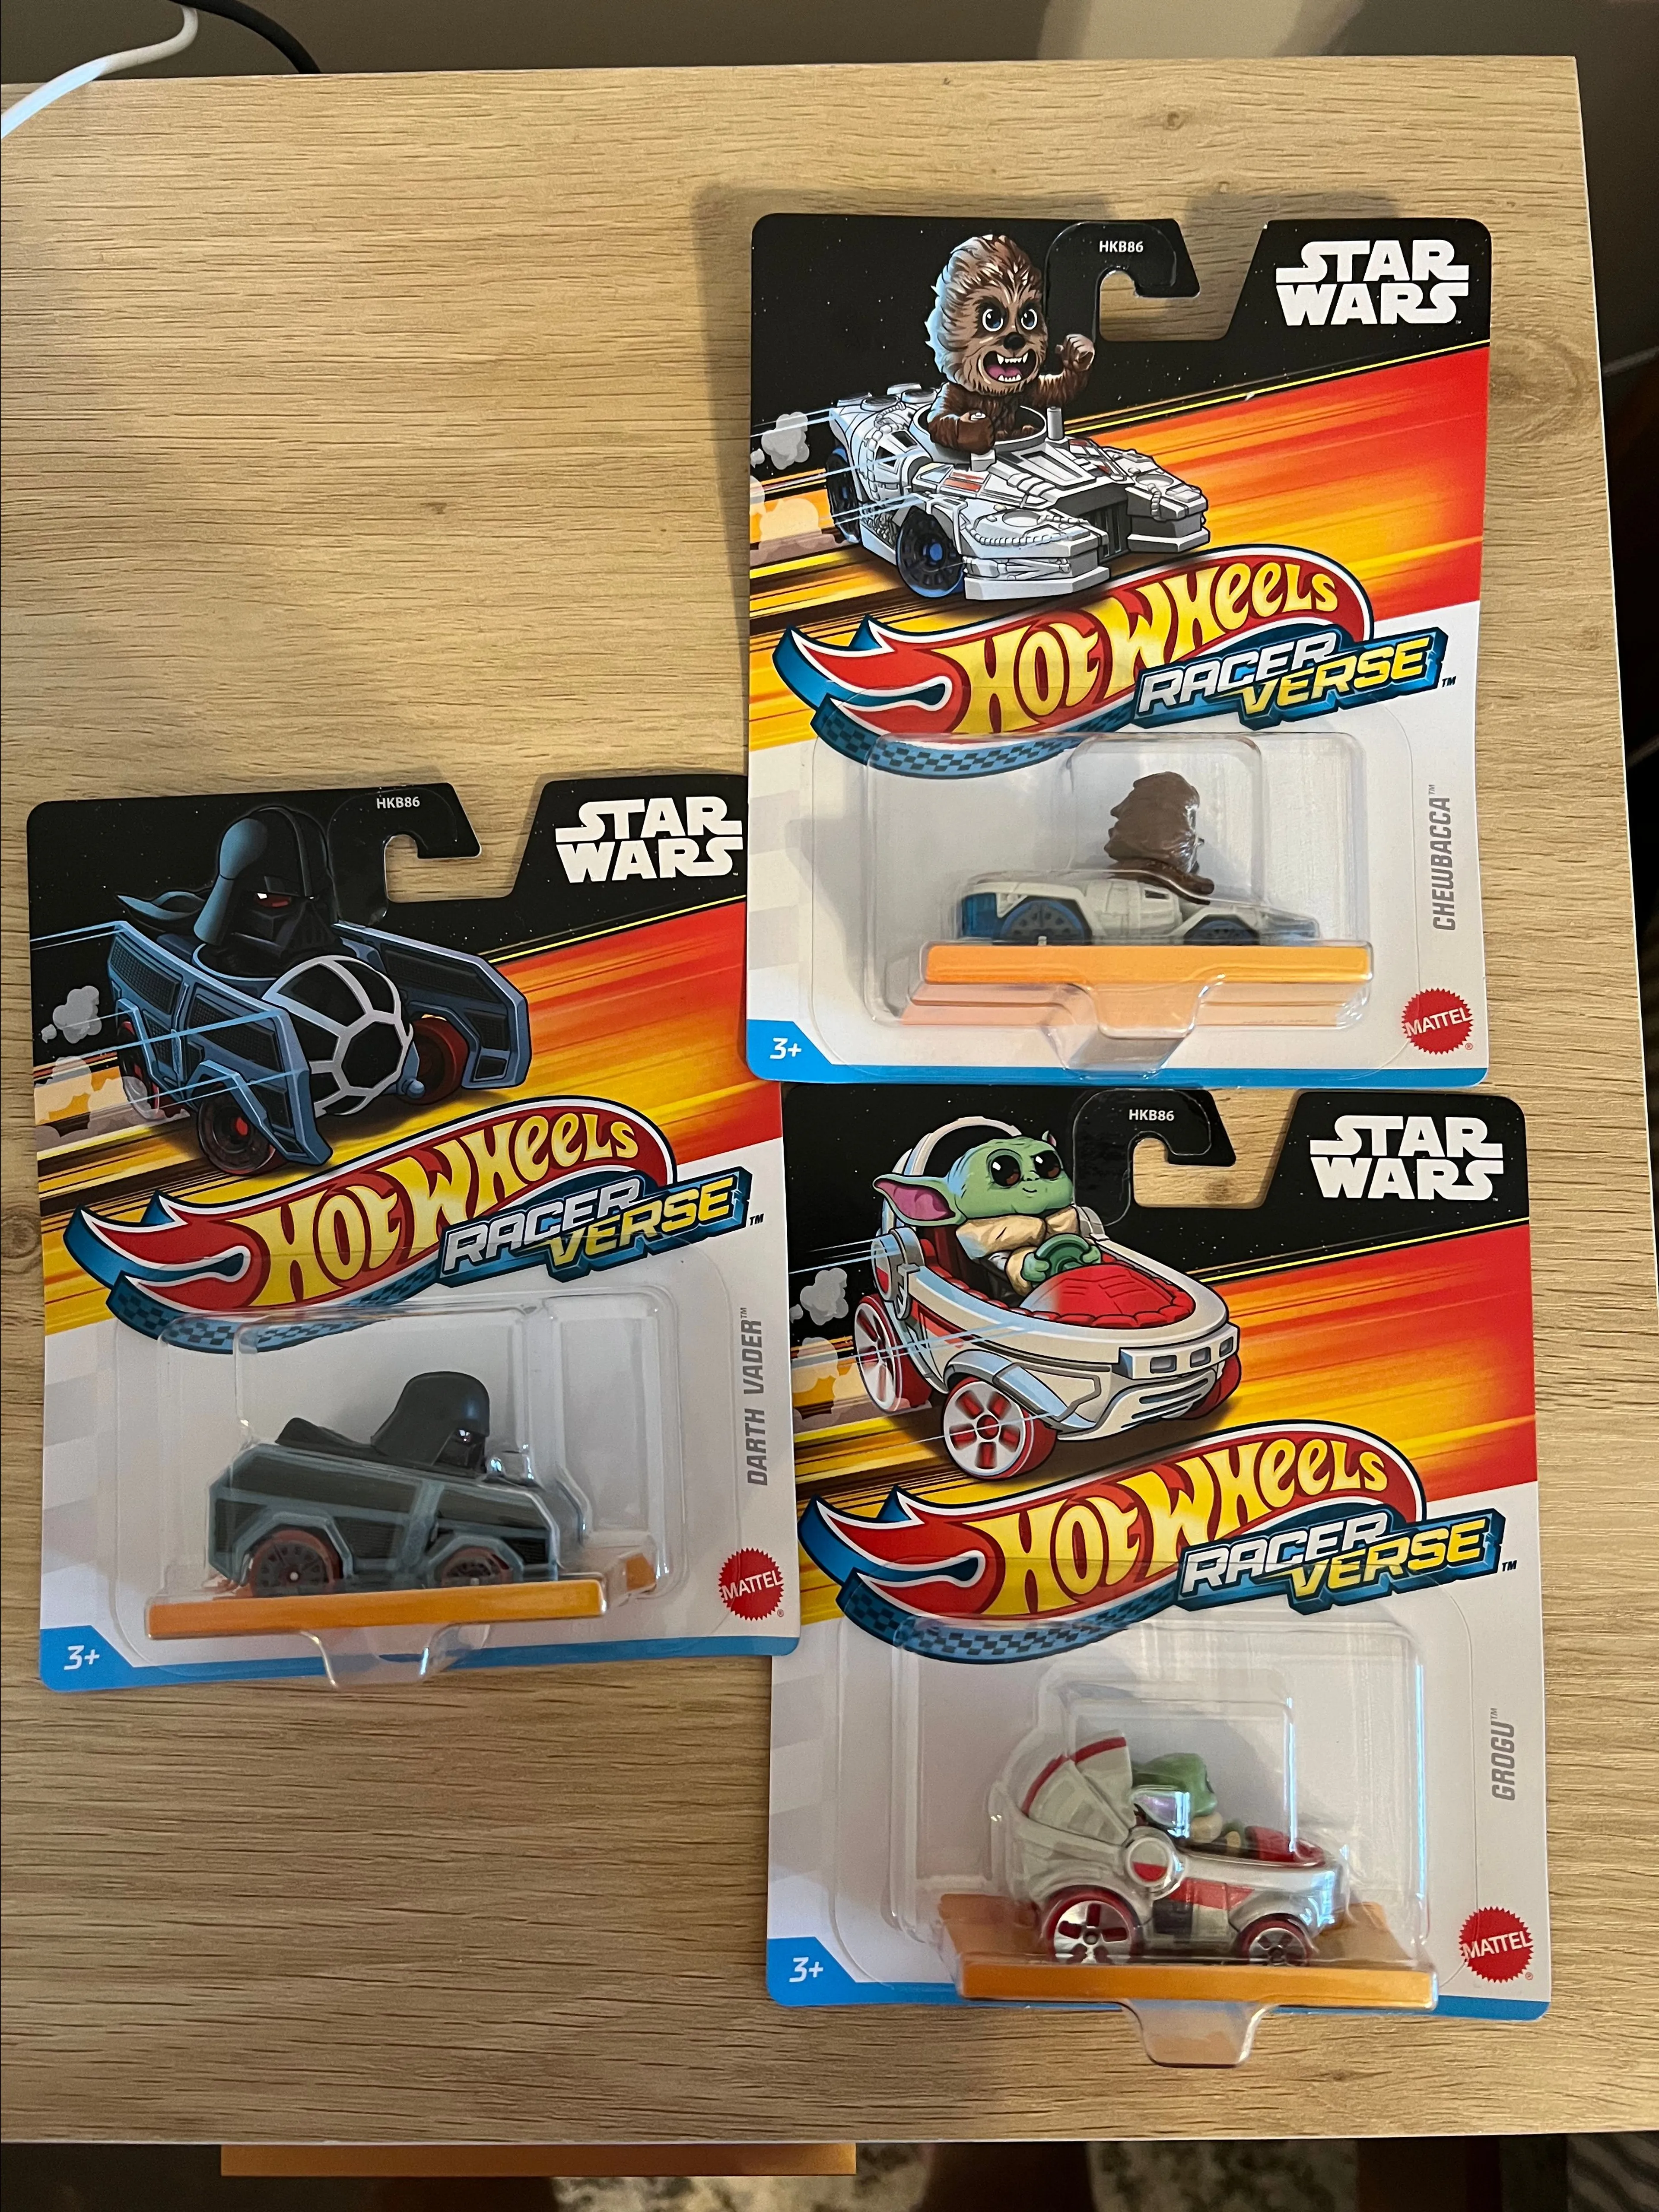 Star Wars Darth Vader, Grogu, & Chewbacca Hot Wheels Racer Verse